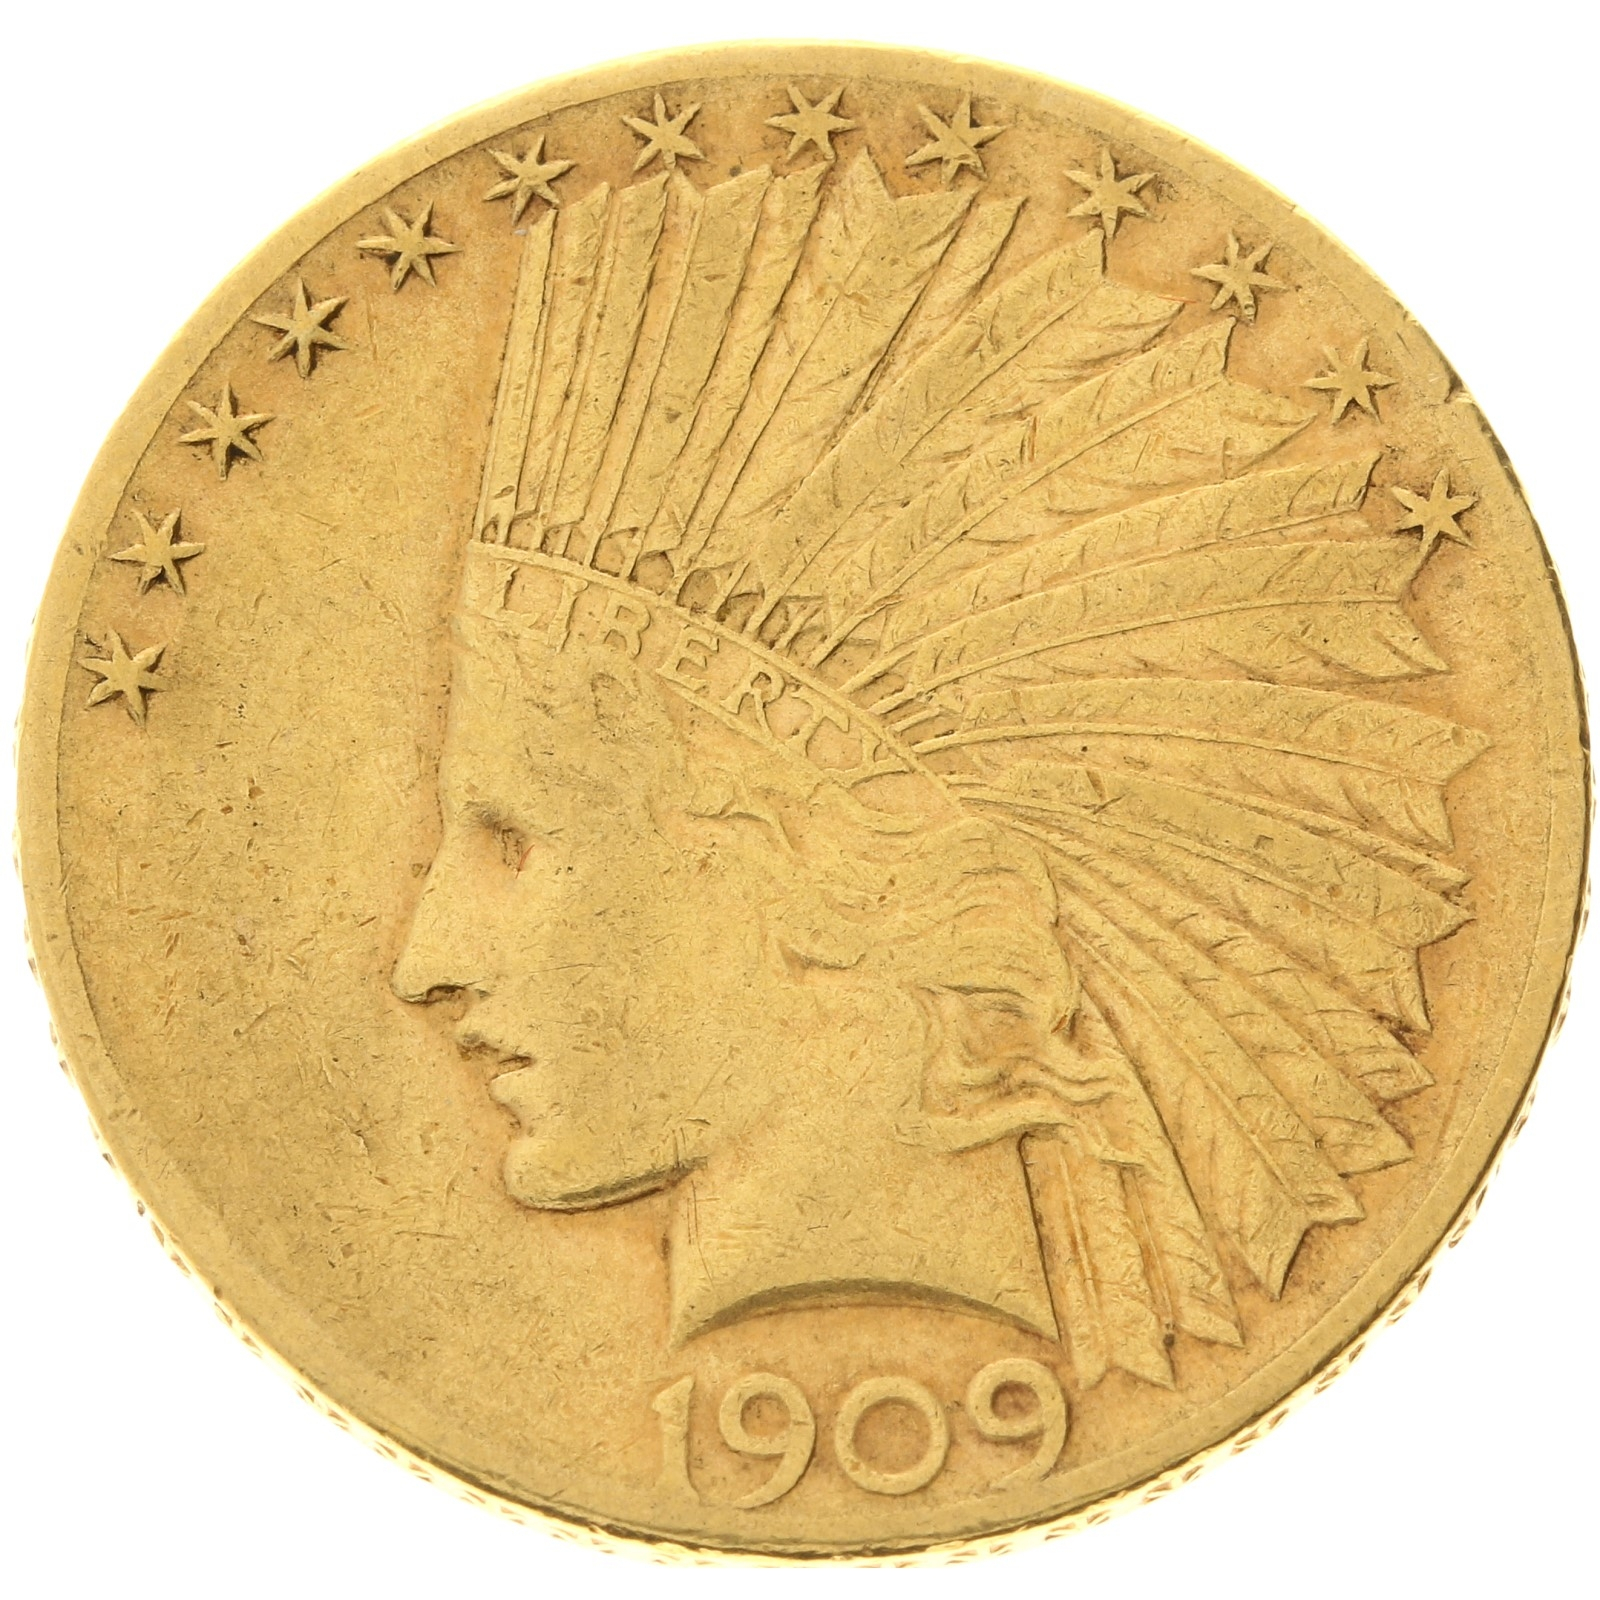 USA - 10 dollars - 1909 - S - Indian Head 